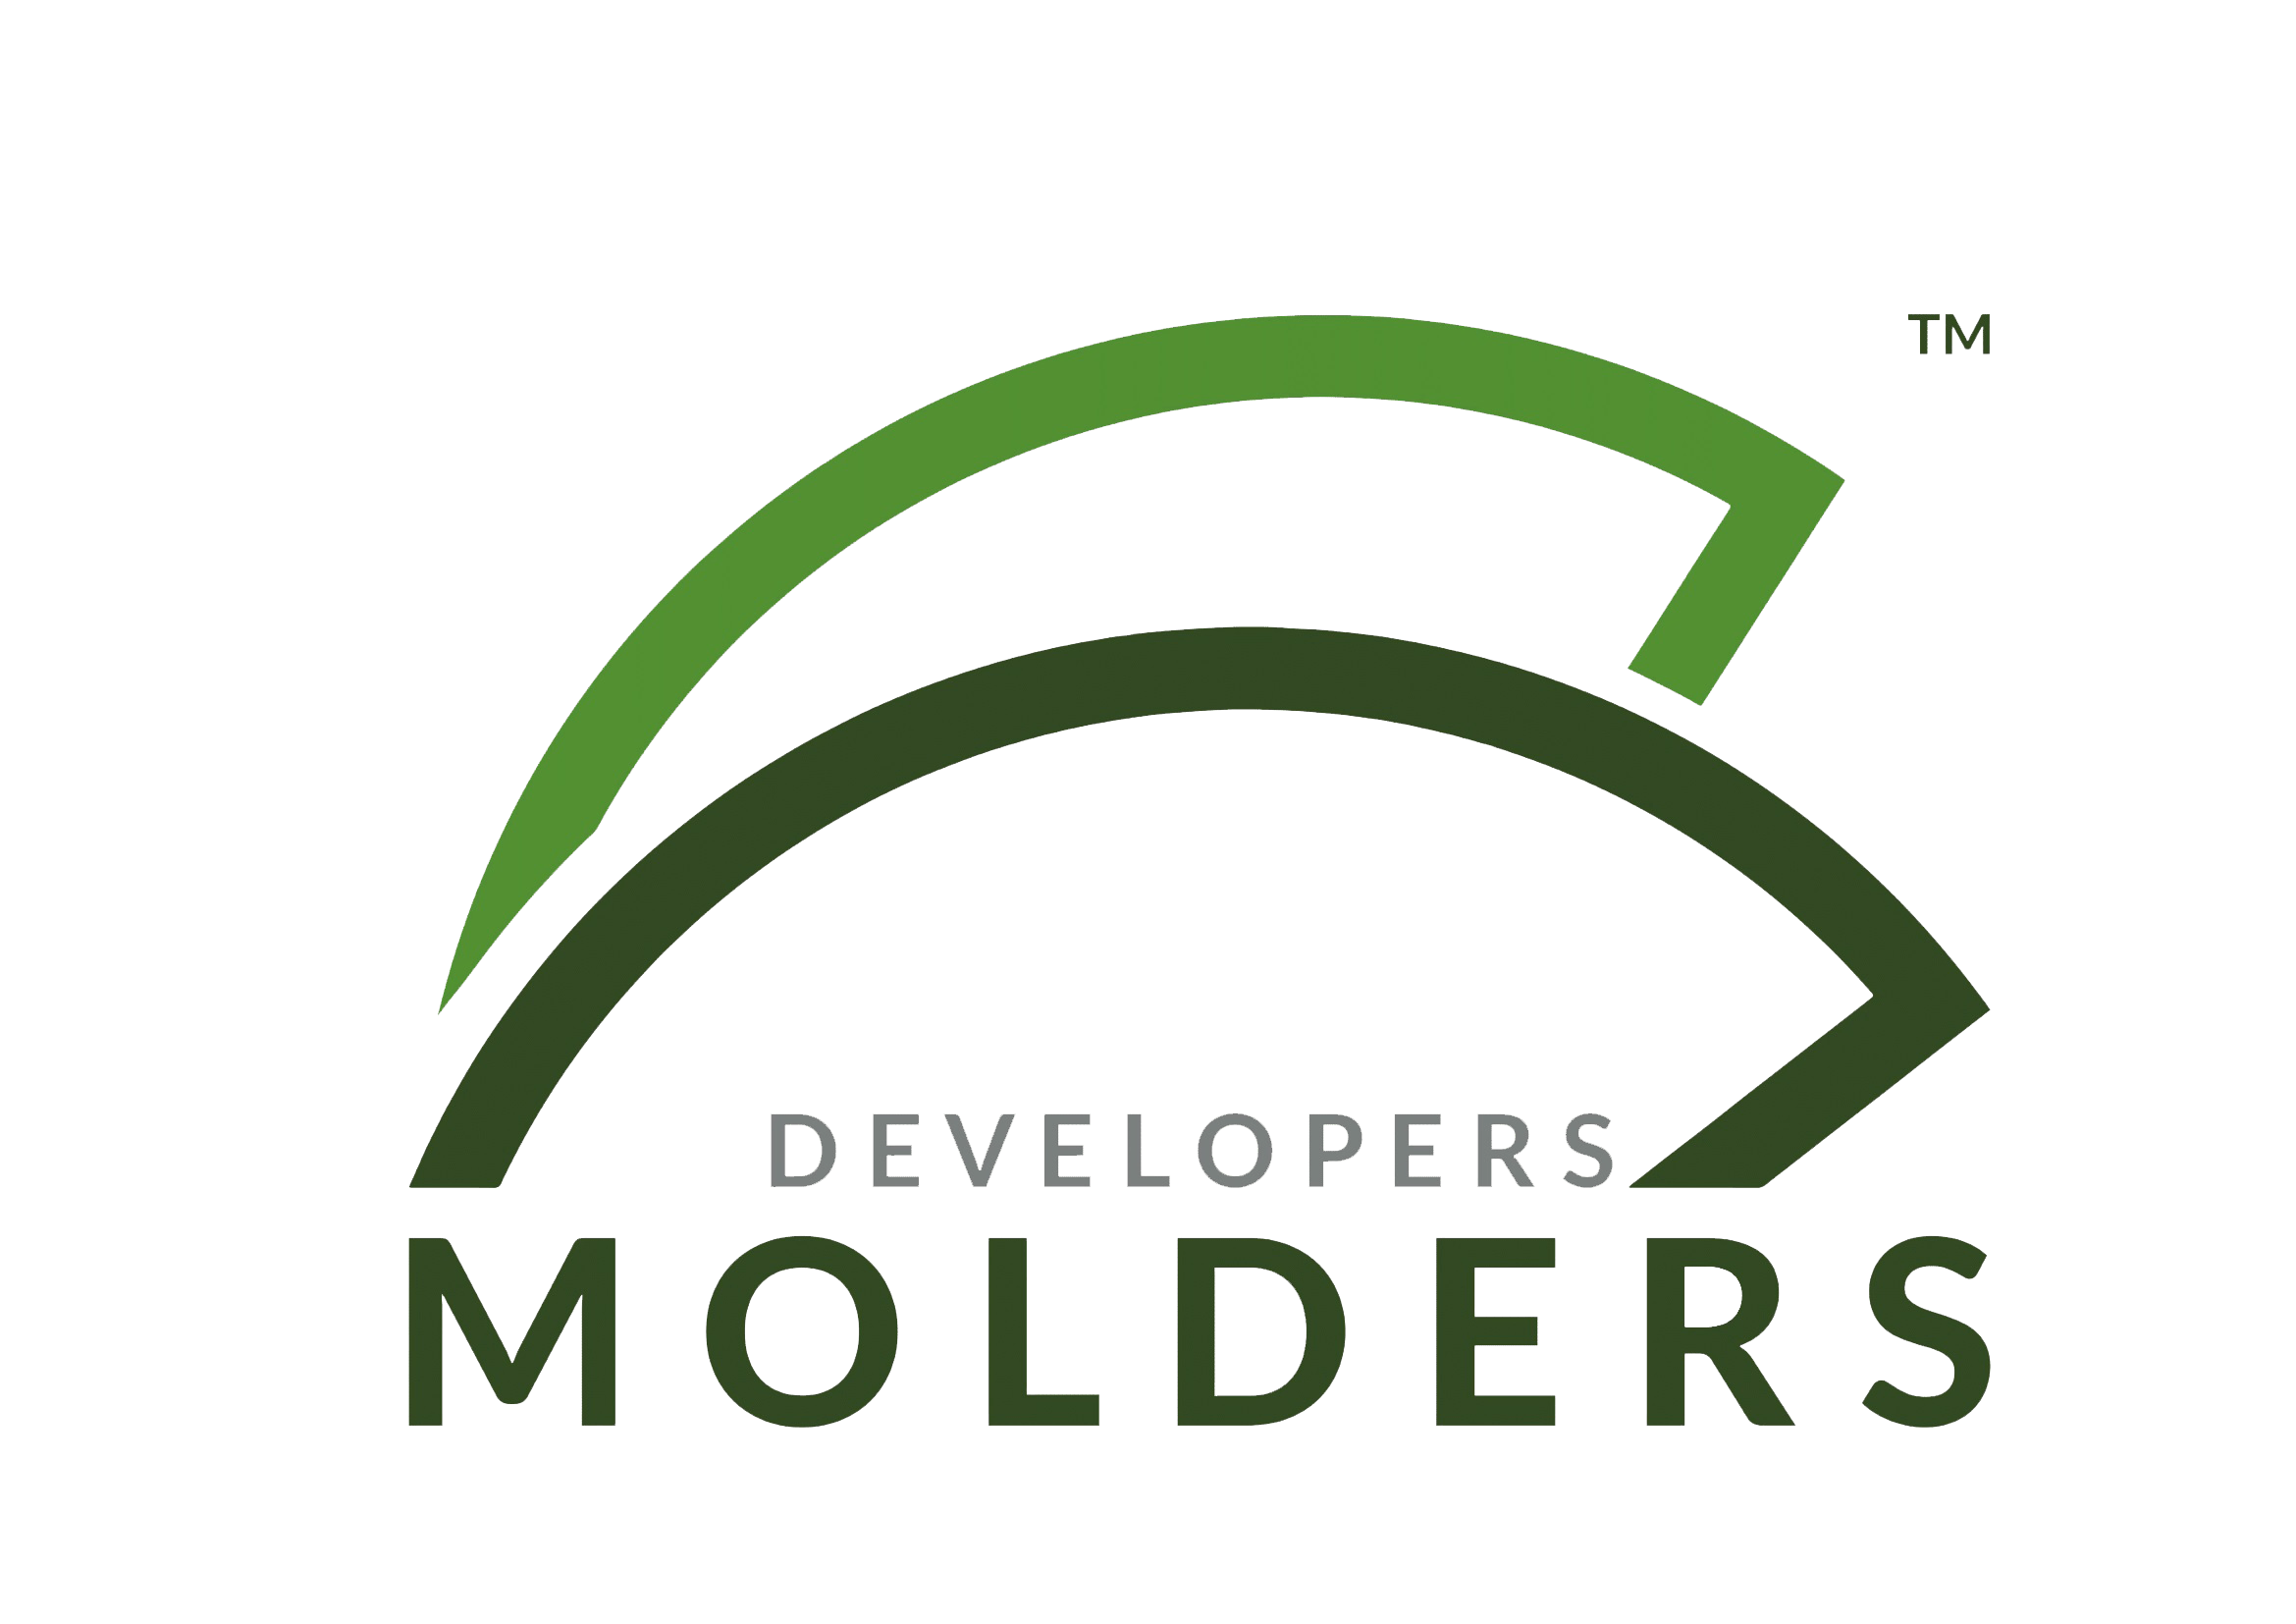 Molders - Developers Ltd